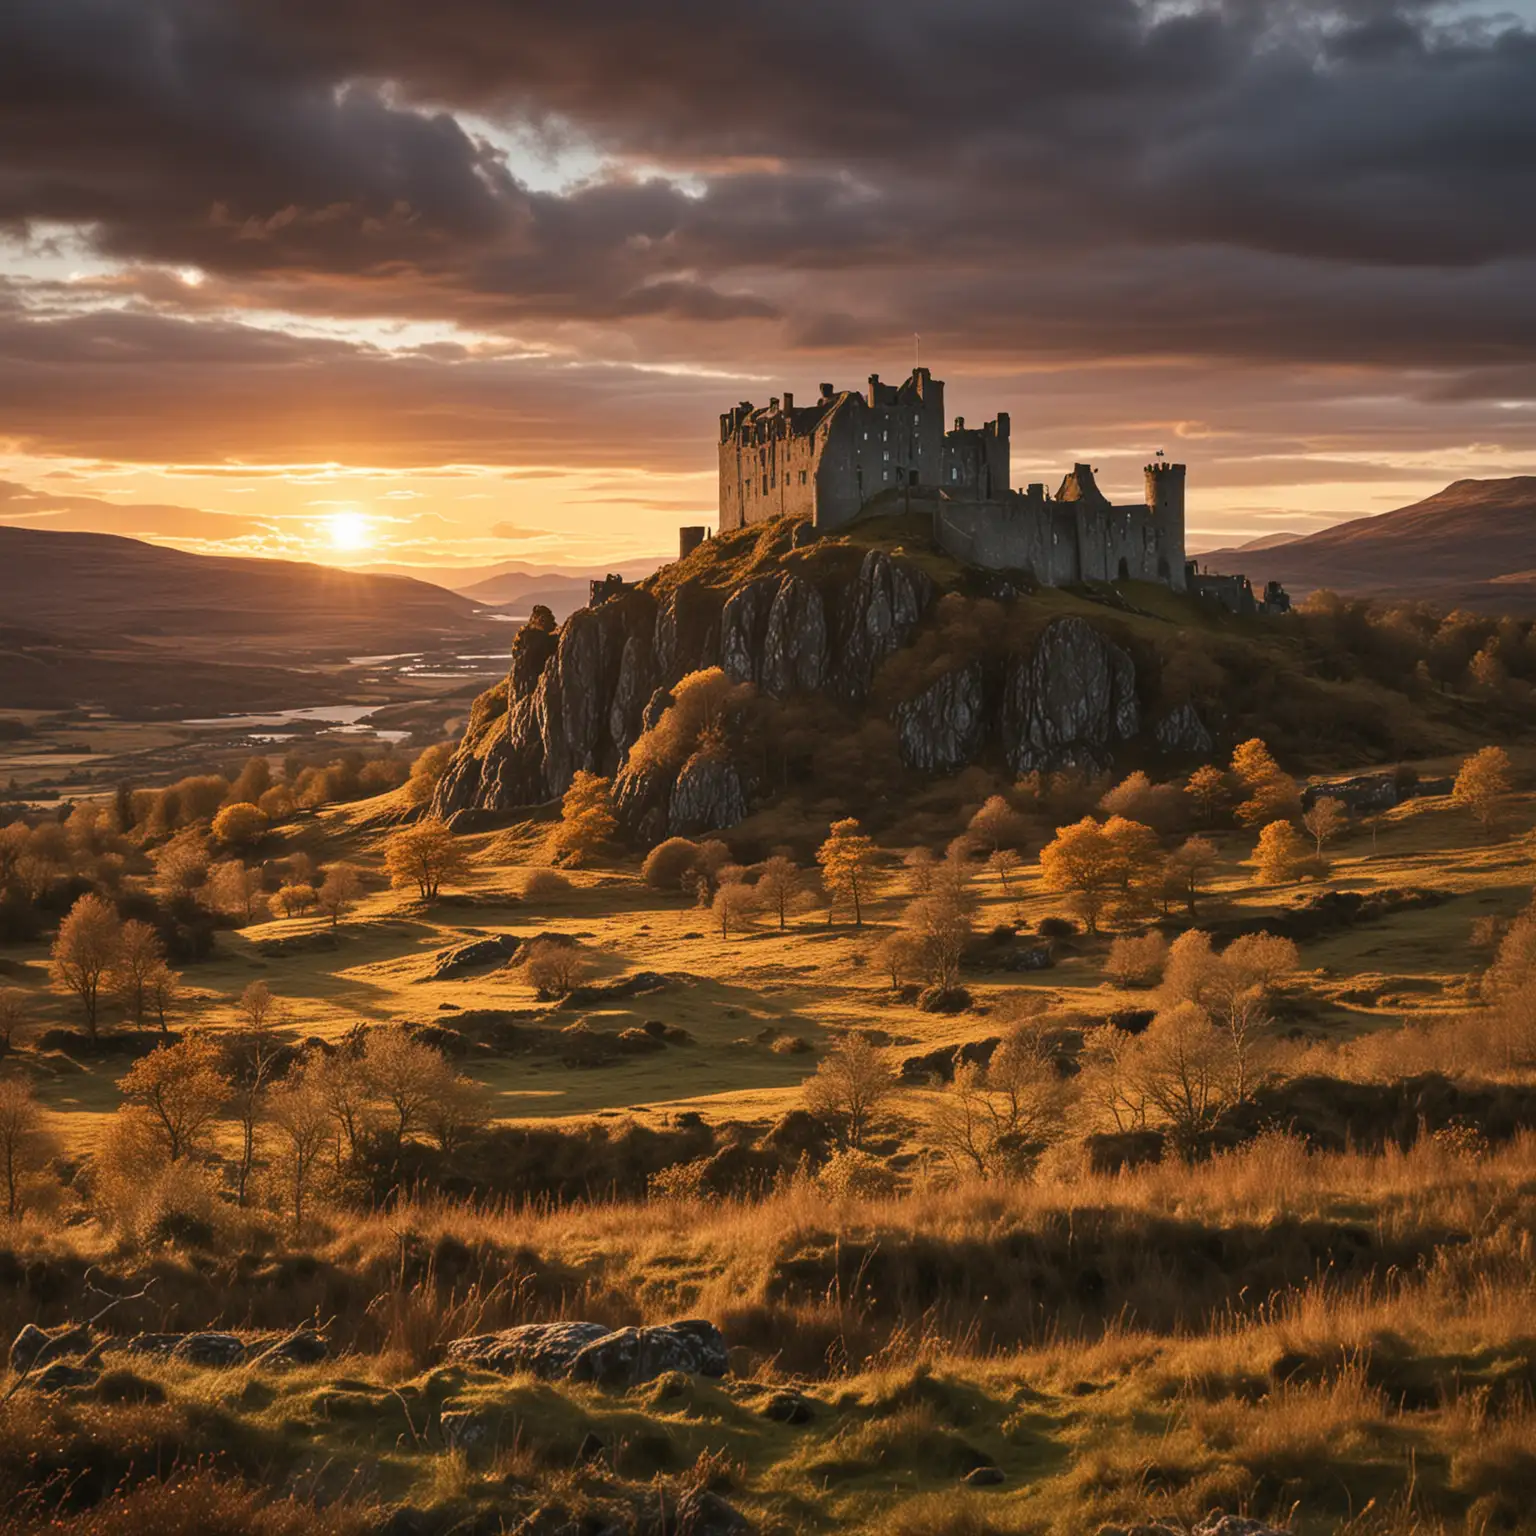 Sunset over Scottish Highlands with Castle and Woodlands